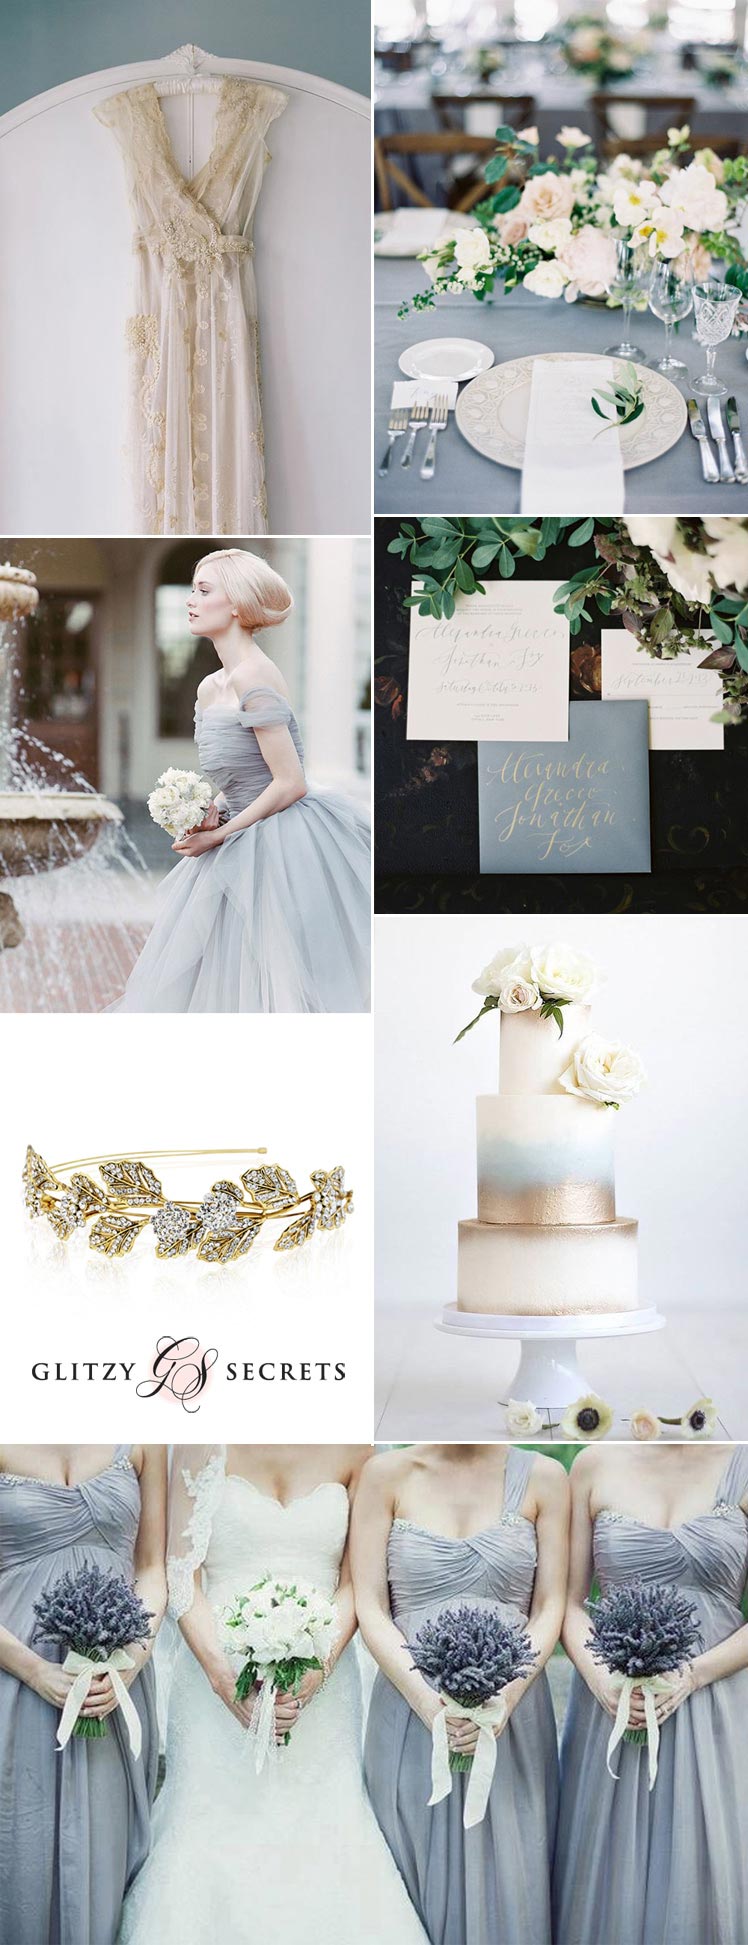 Ideas for a gold and blue wedding colour scheme